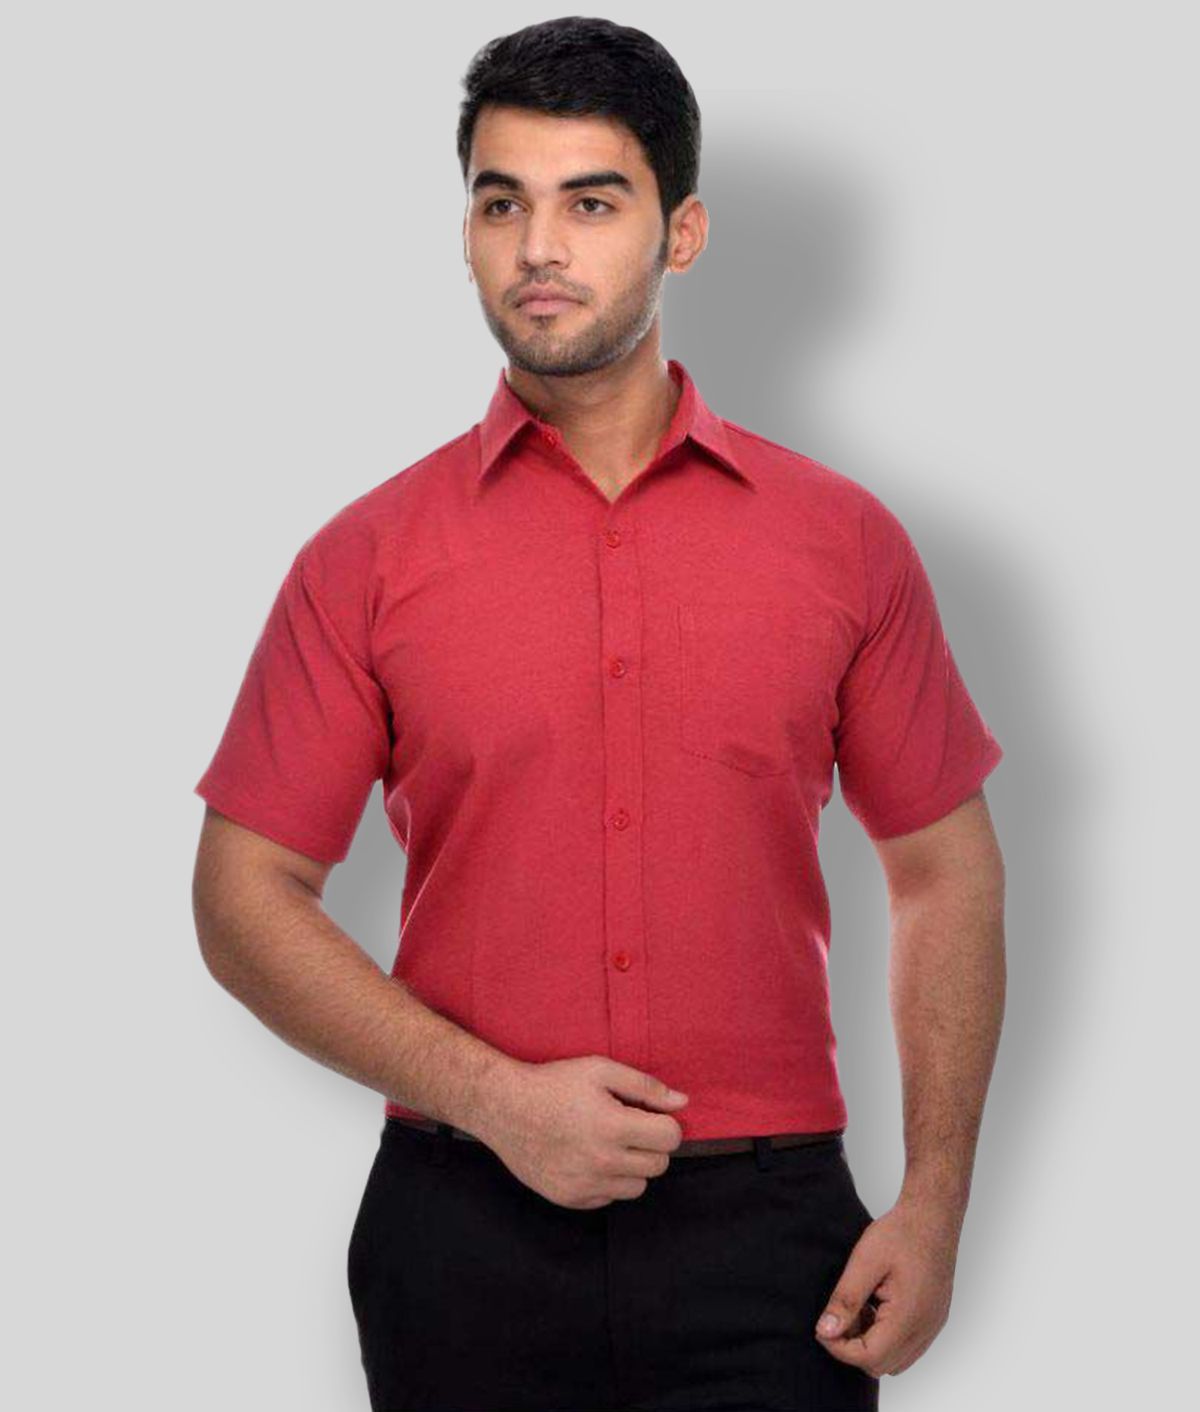     			DESHBANDHU DBK - Red Cotton Regular Fit Men's Casual Shirt ( Pack of 1 )